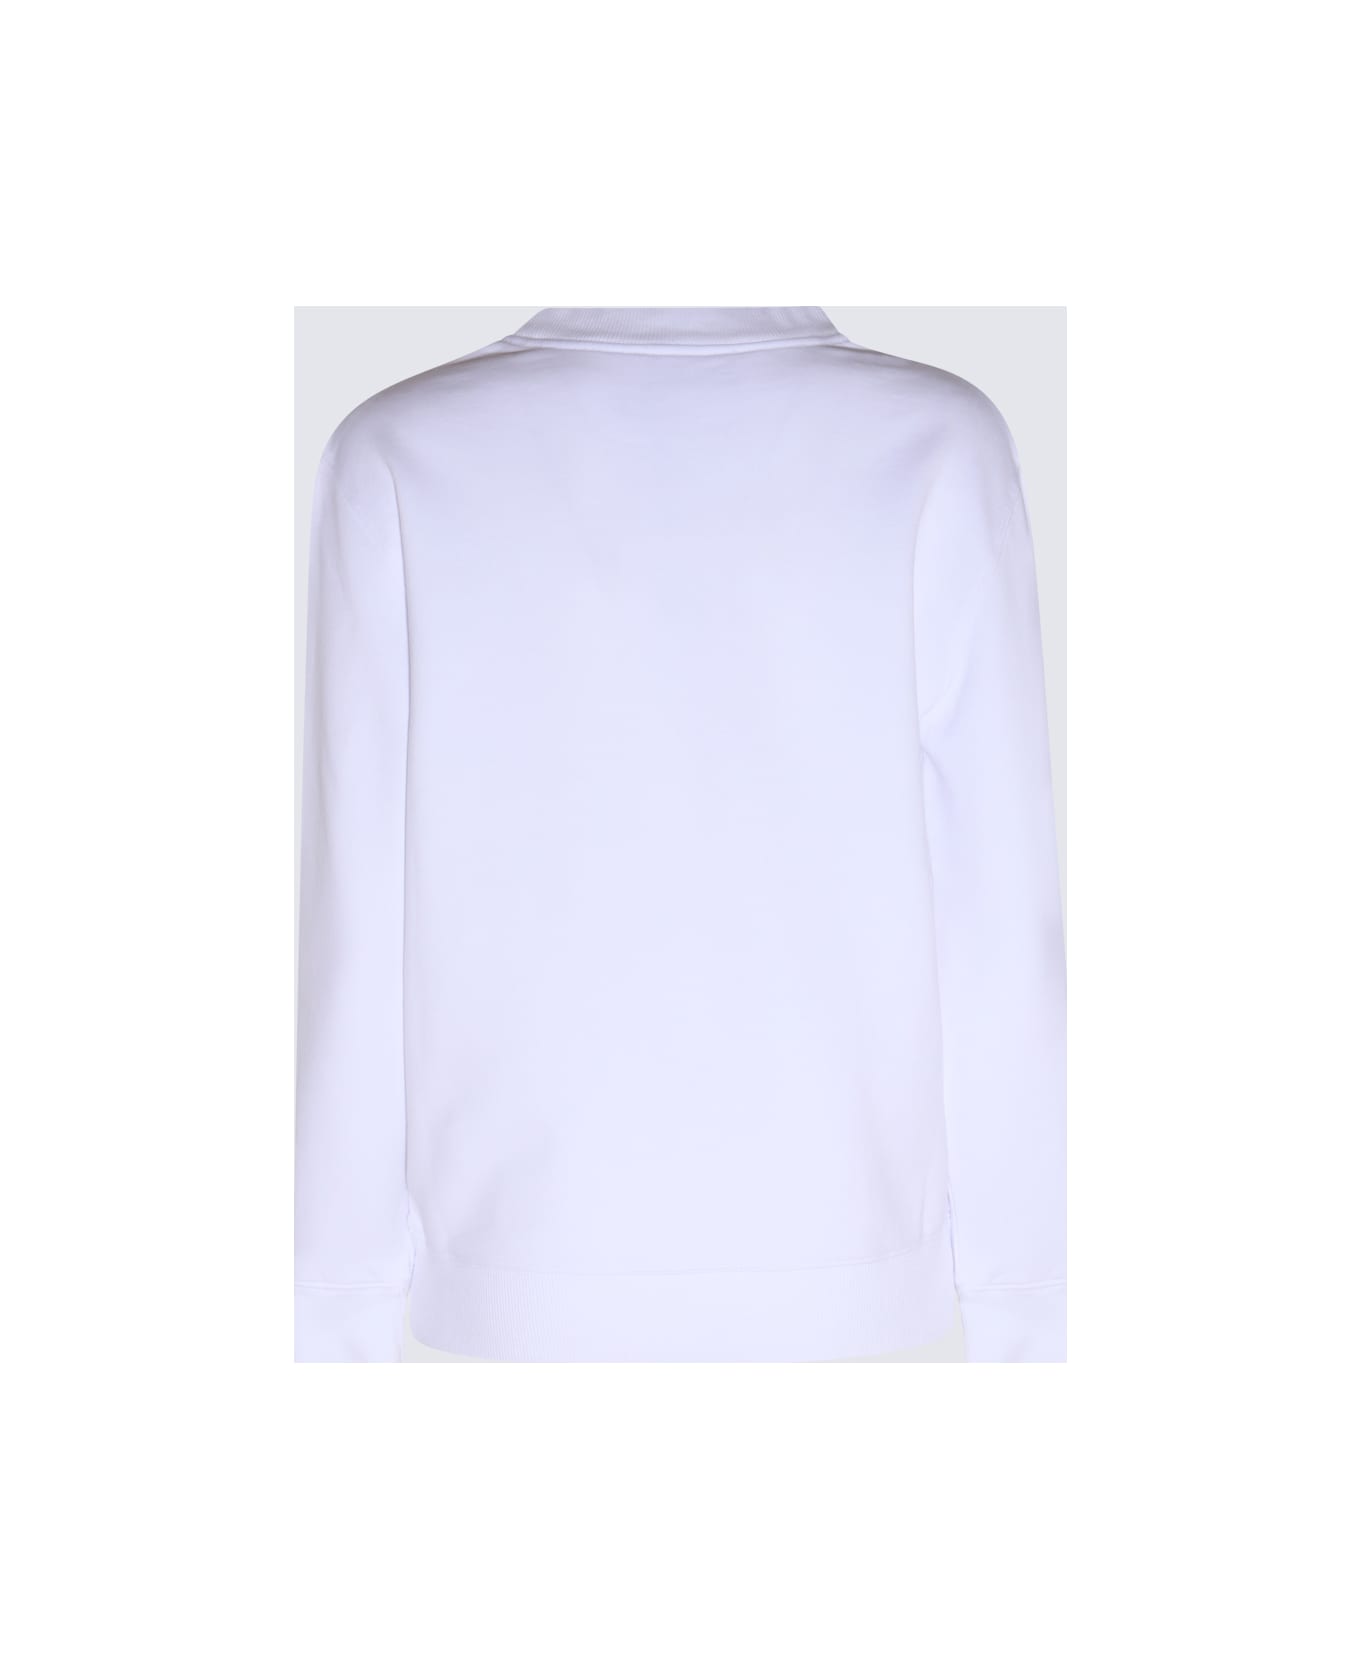 Lanvin White Cotton Sweatshirt - White